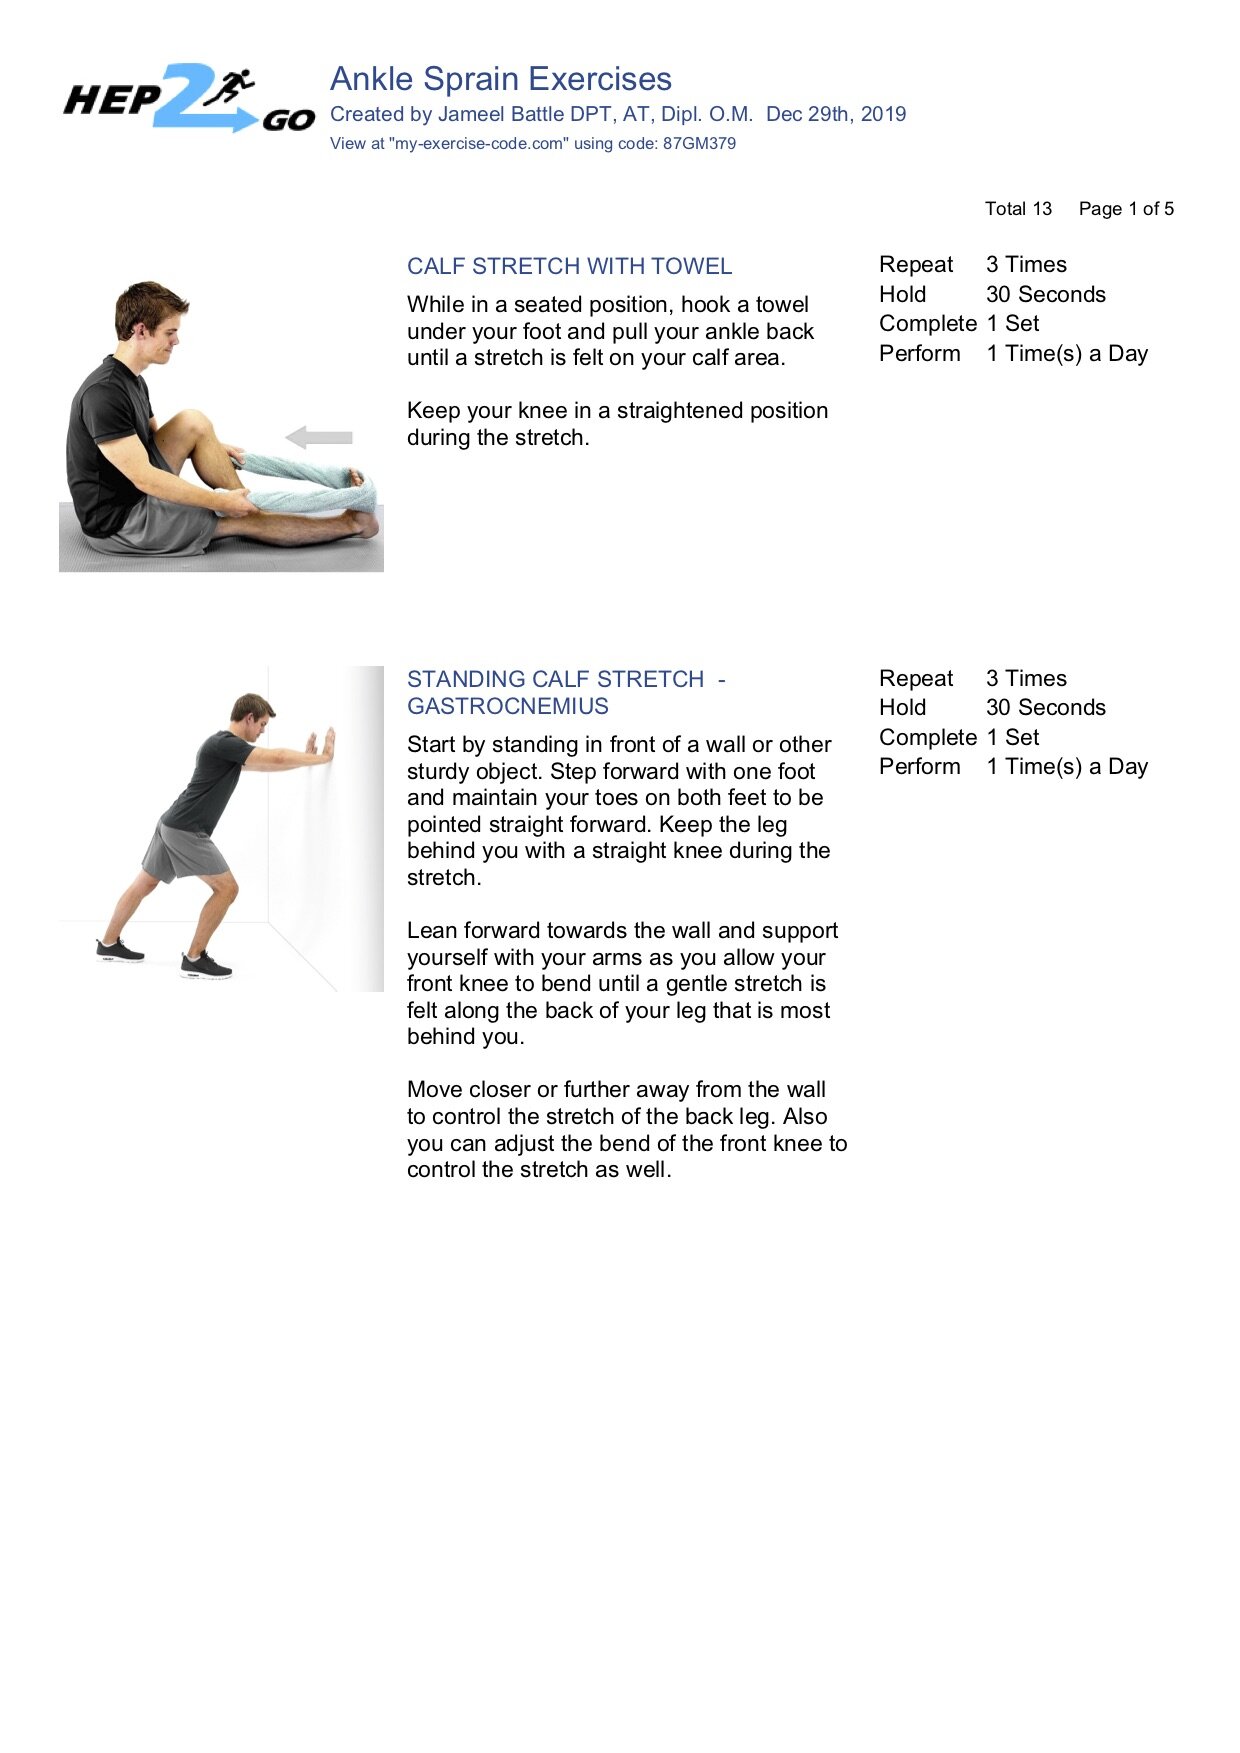 Ankle Sprain: Rehab Exercises